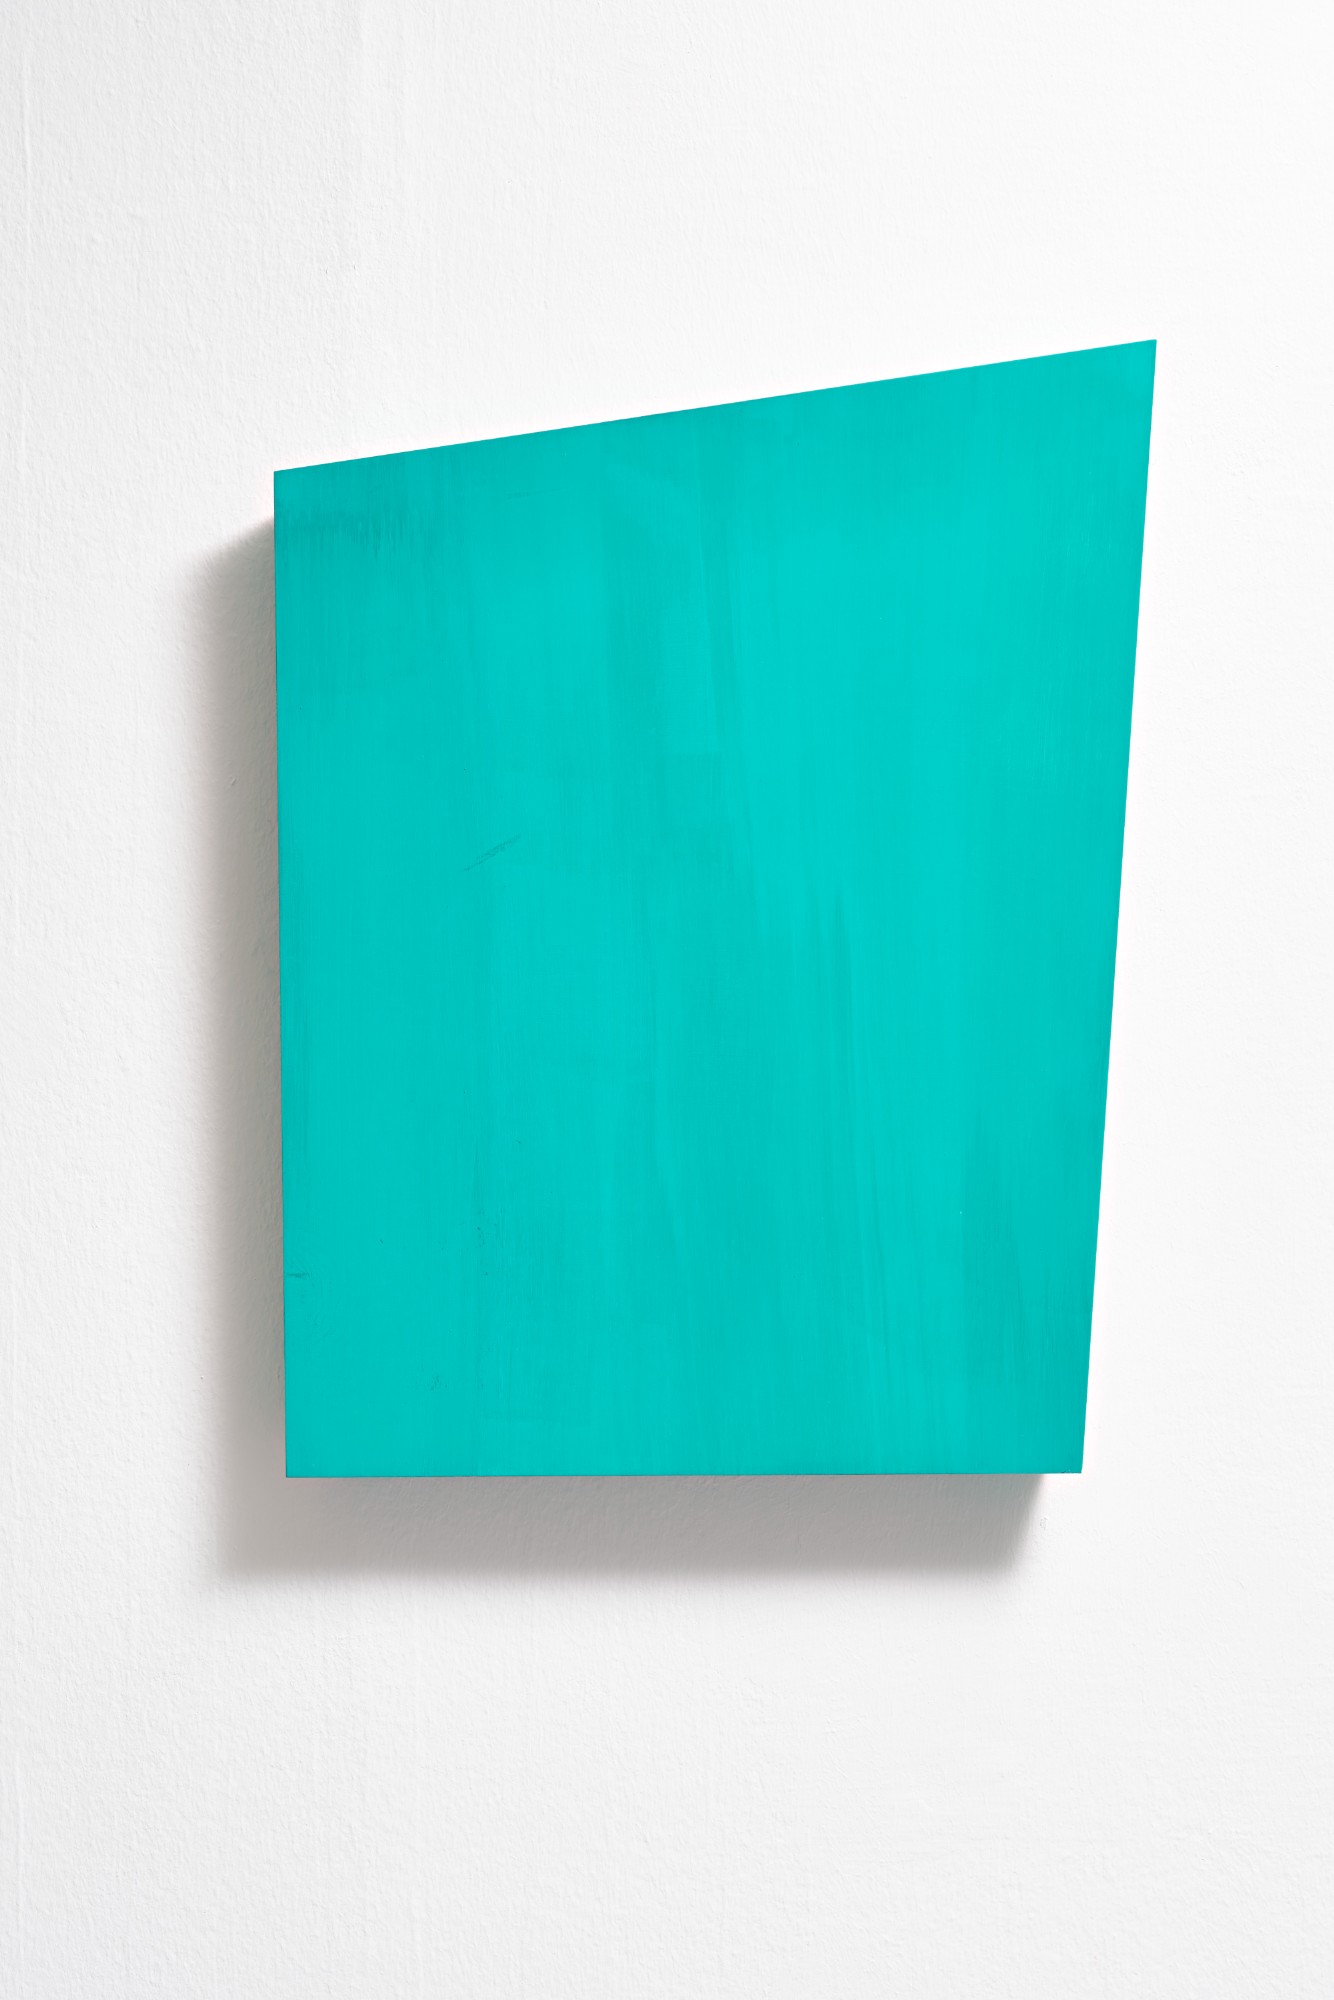 Madeleine Boschan, In the further end six figures, a sort of room I, 2019, beechwood, eggtempera, 61,5 x 47,5 x 5 cm